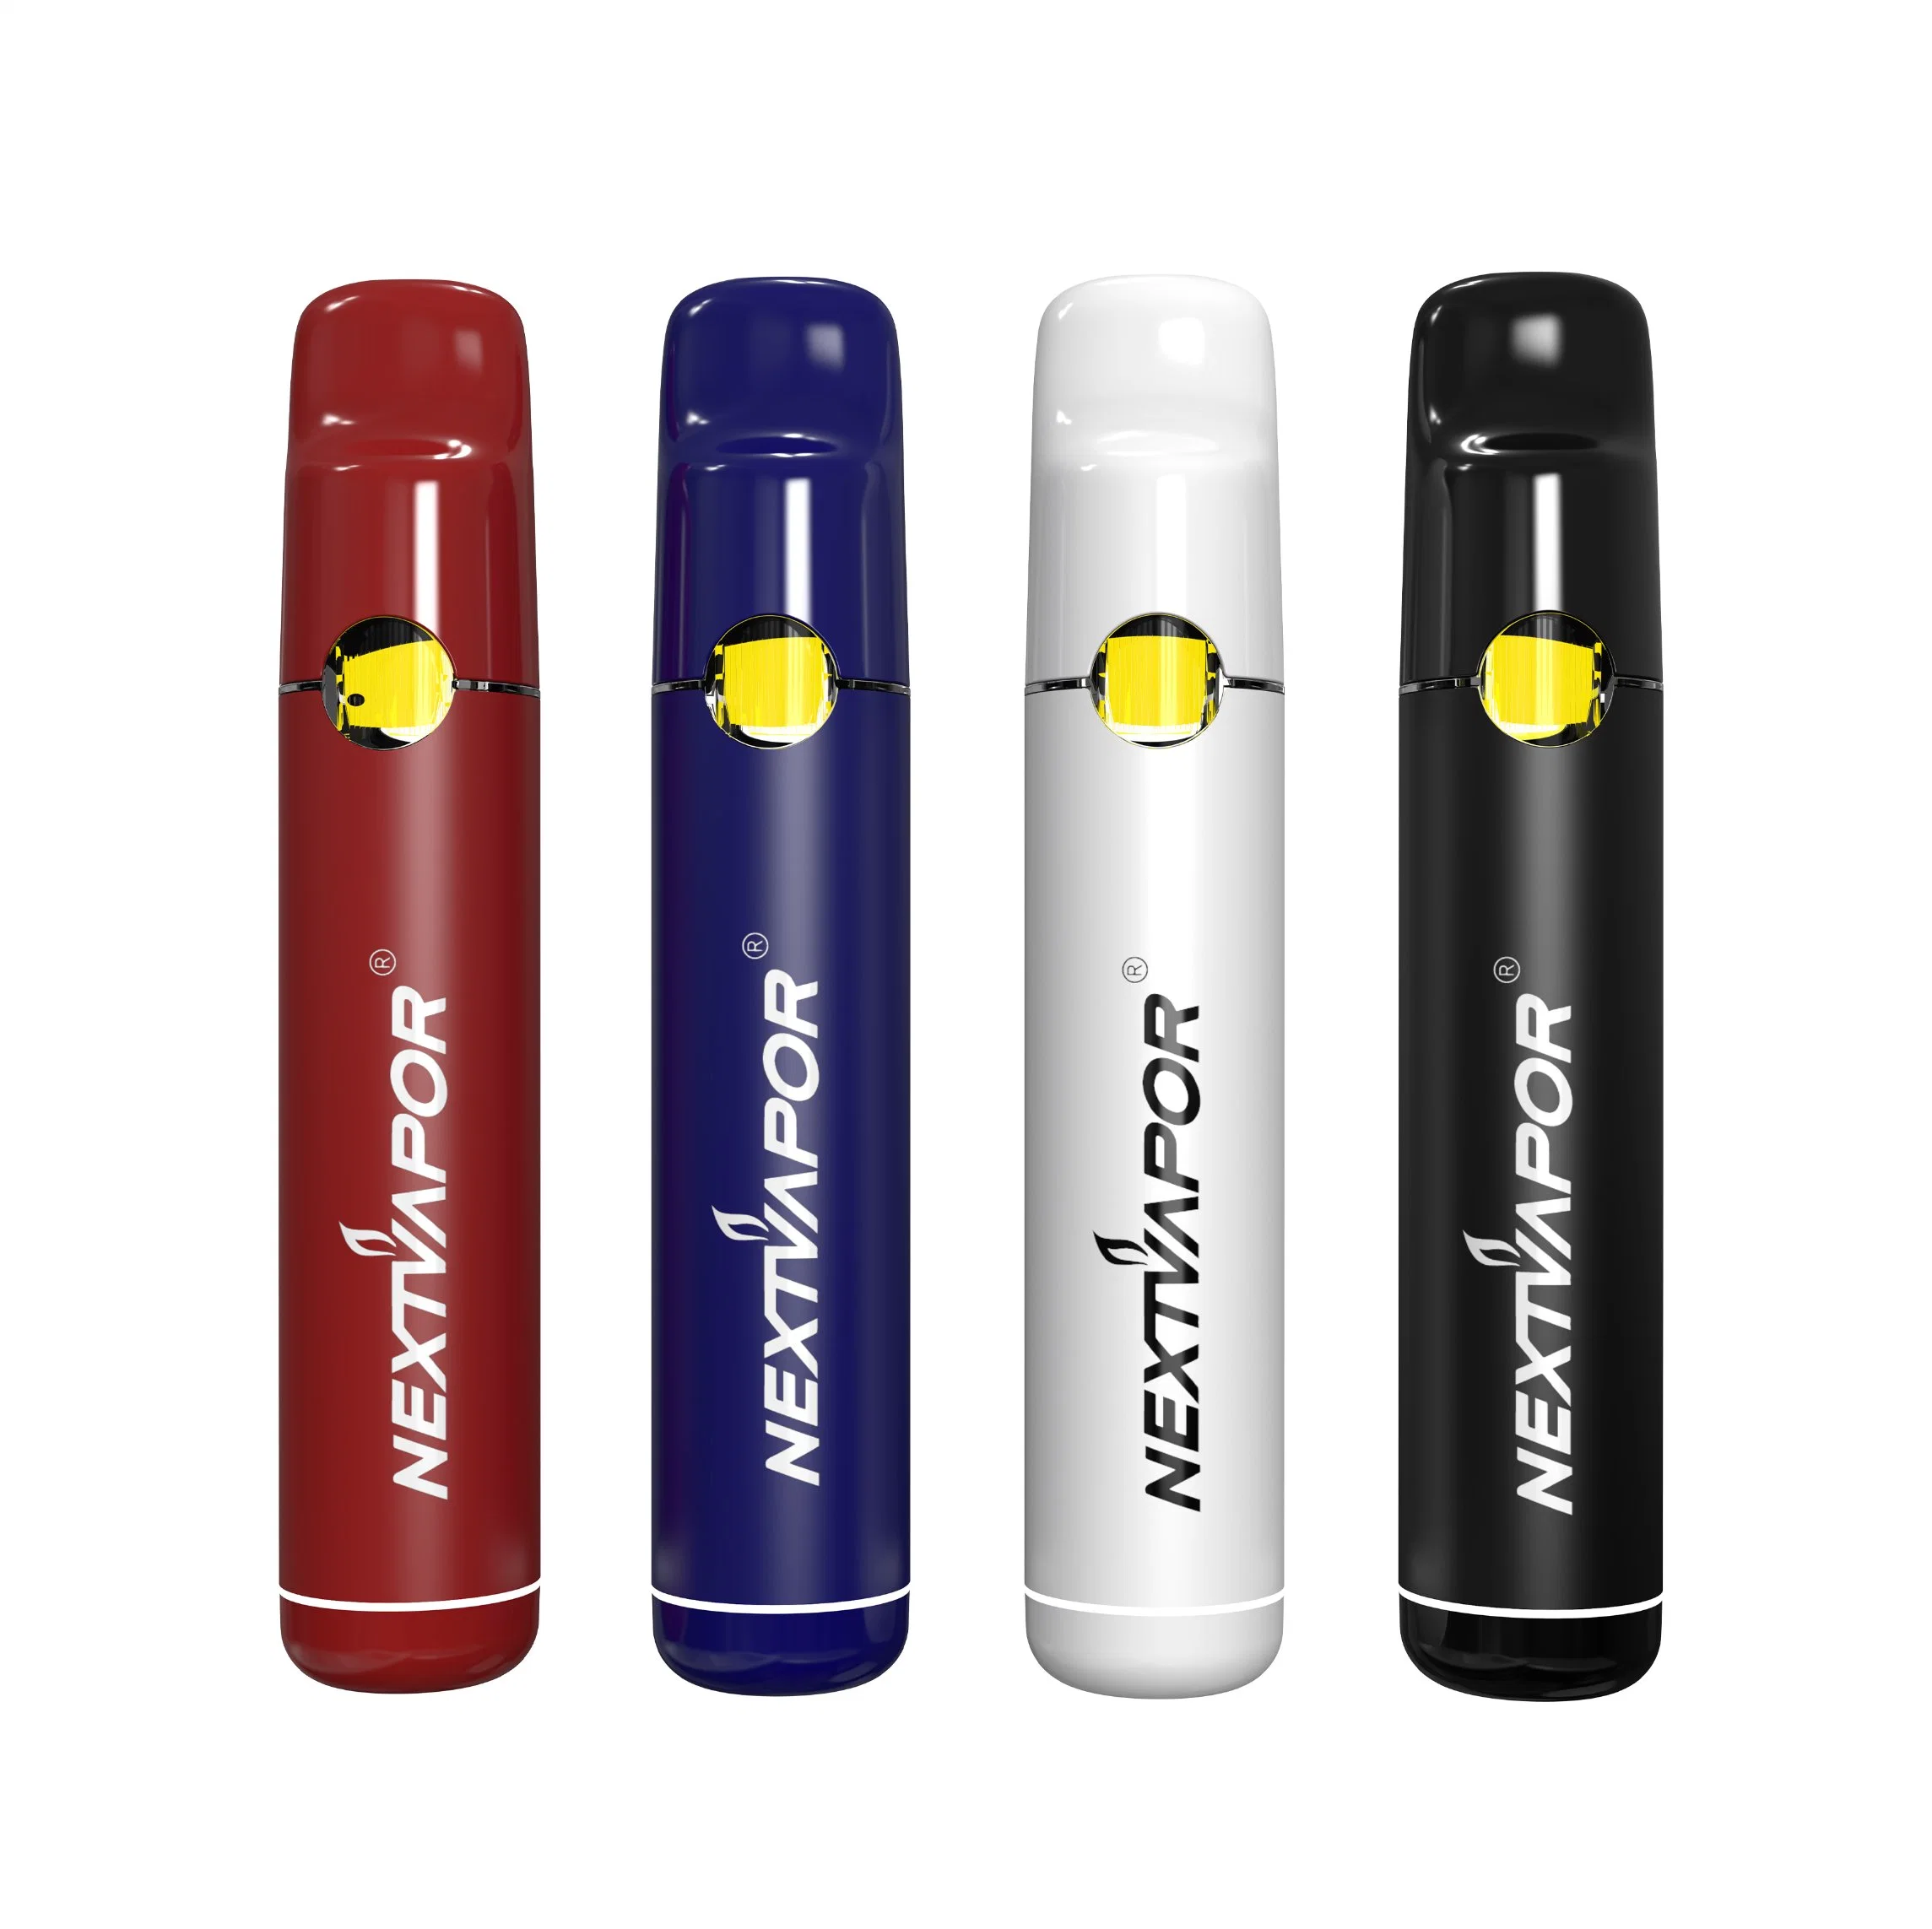 Nextvapor Newest Design Predator de baja temperatura VAPE Pen E-Cigarette Starter Kits